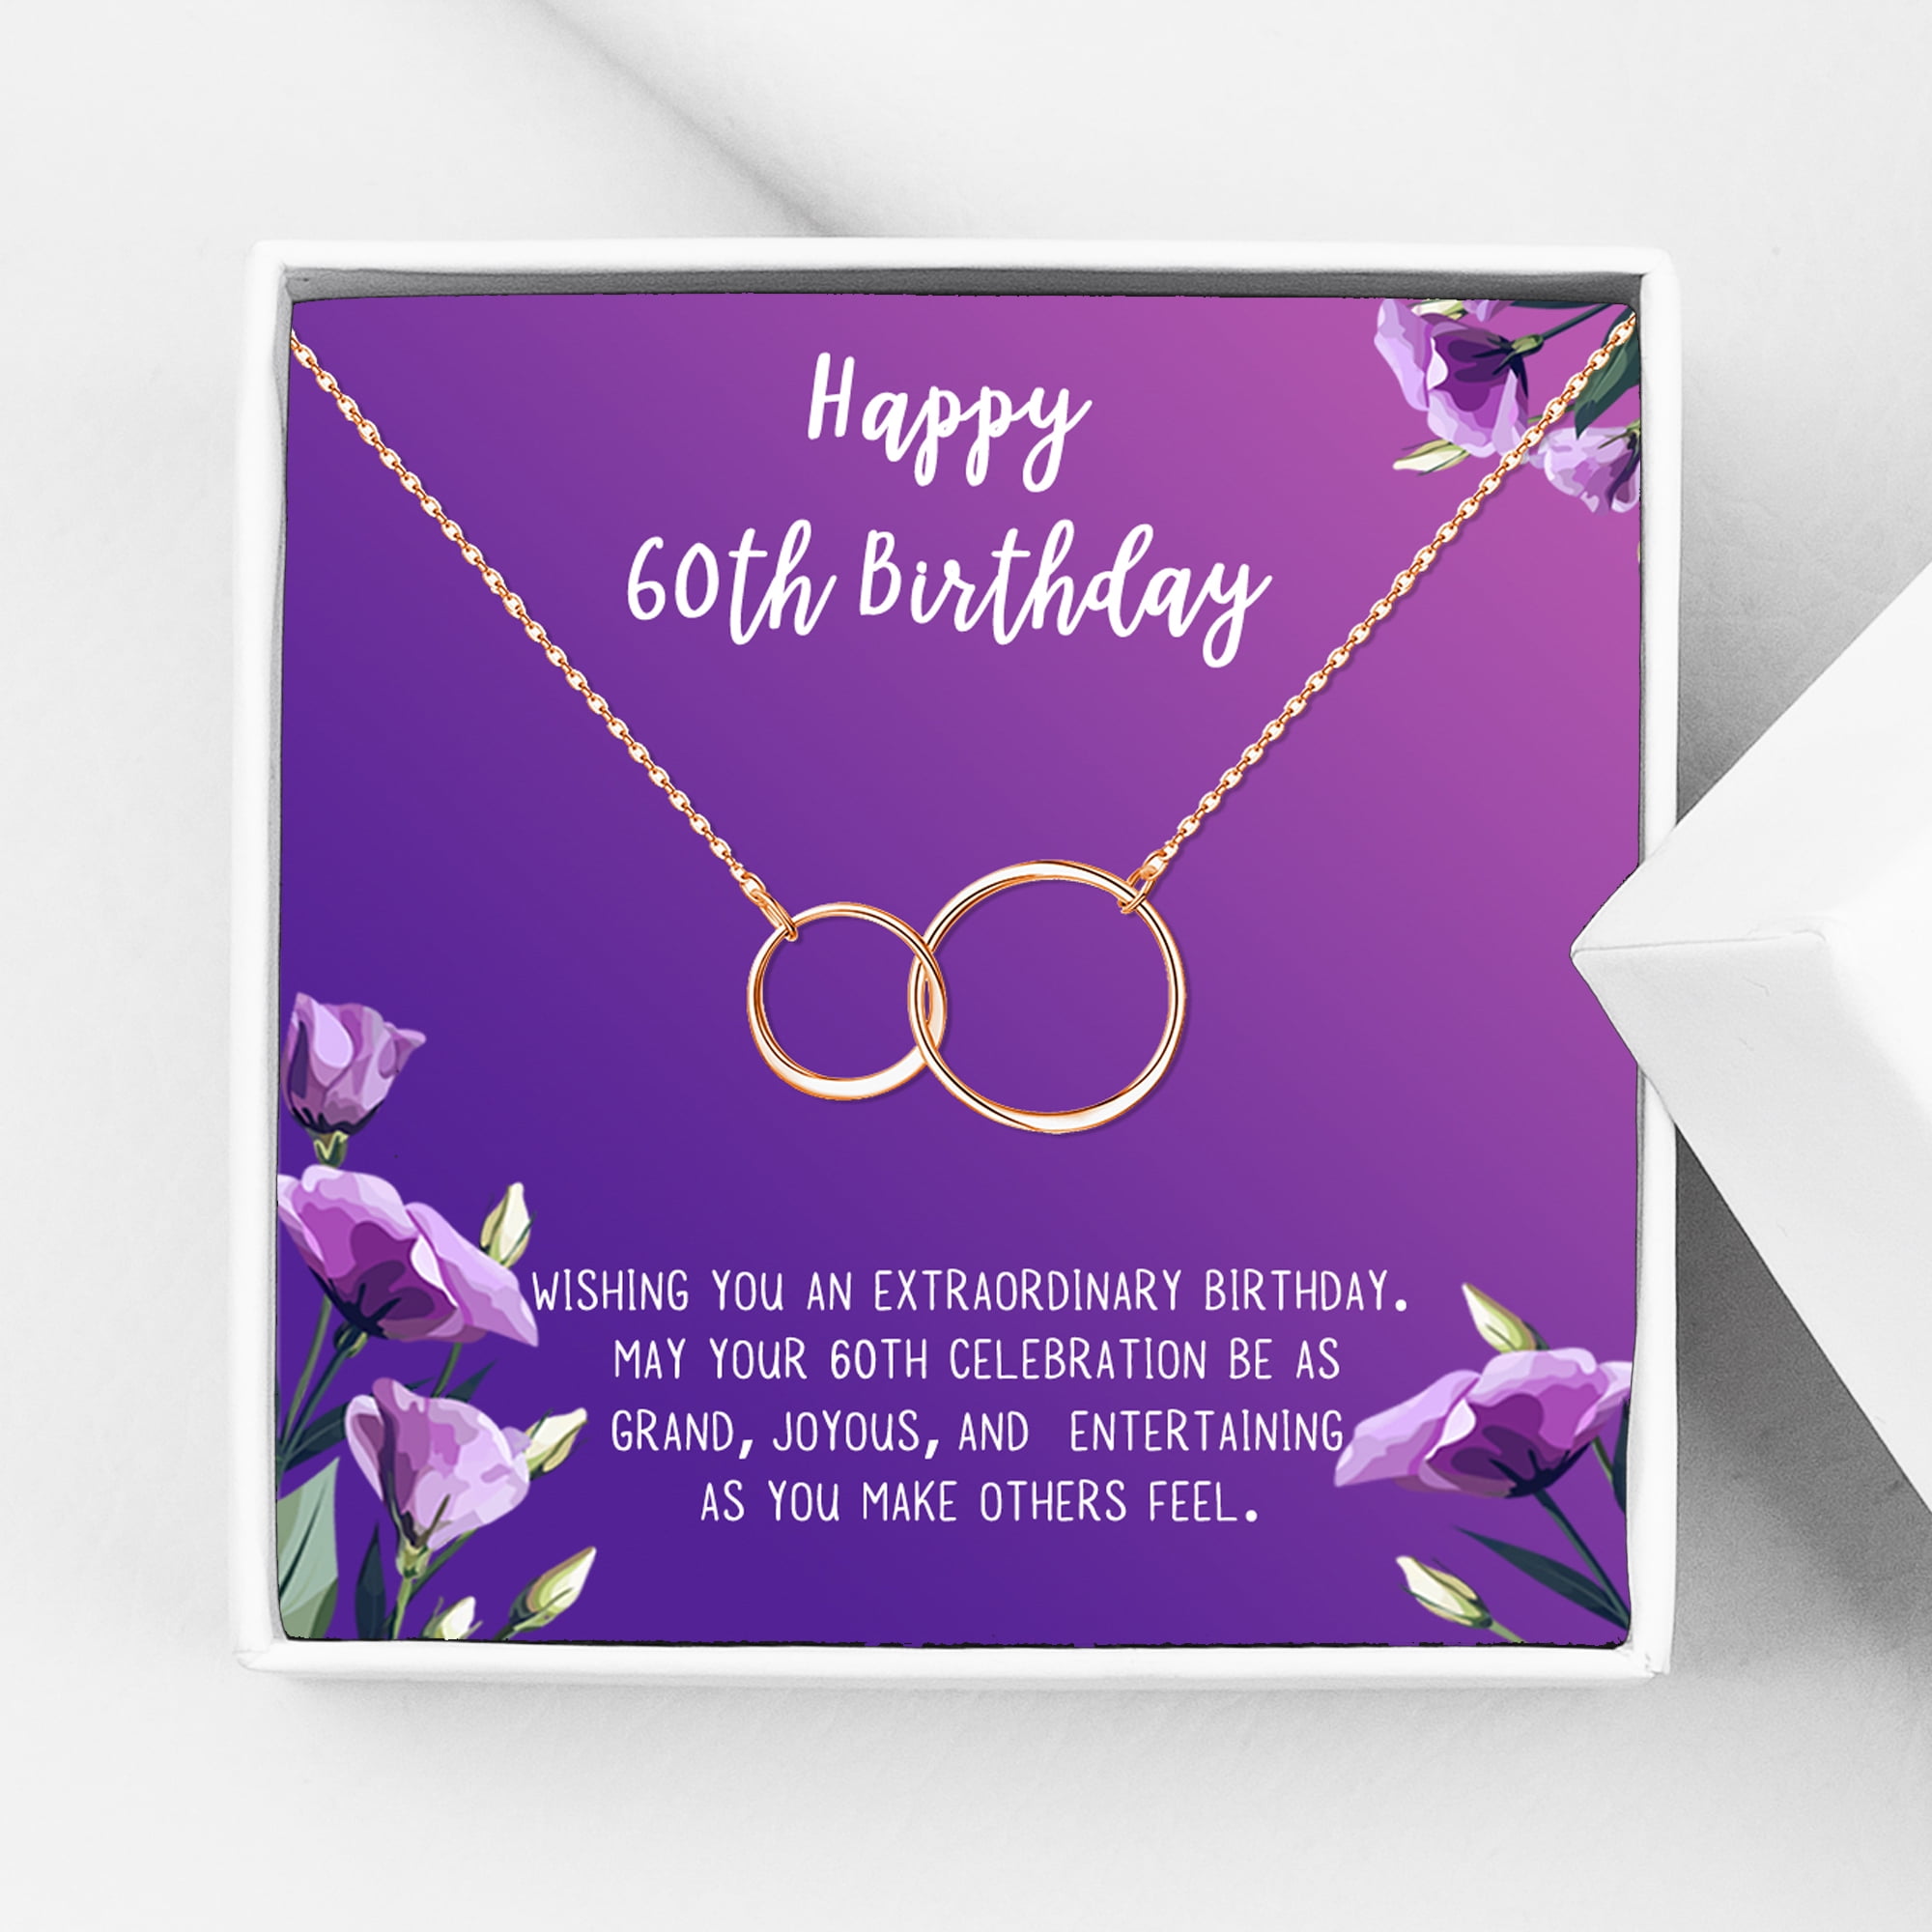 Happy 60th Birthday Alluring Necklace Birthday Gift Ideas for Women 60th Birthday Gift 60th Necklace birthday gifts for Mom,Gifts Jewelry